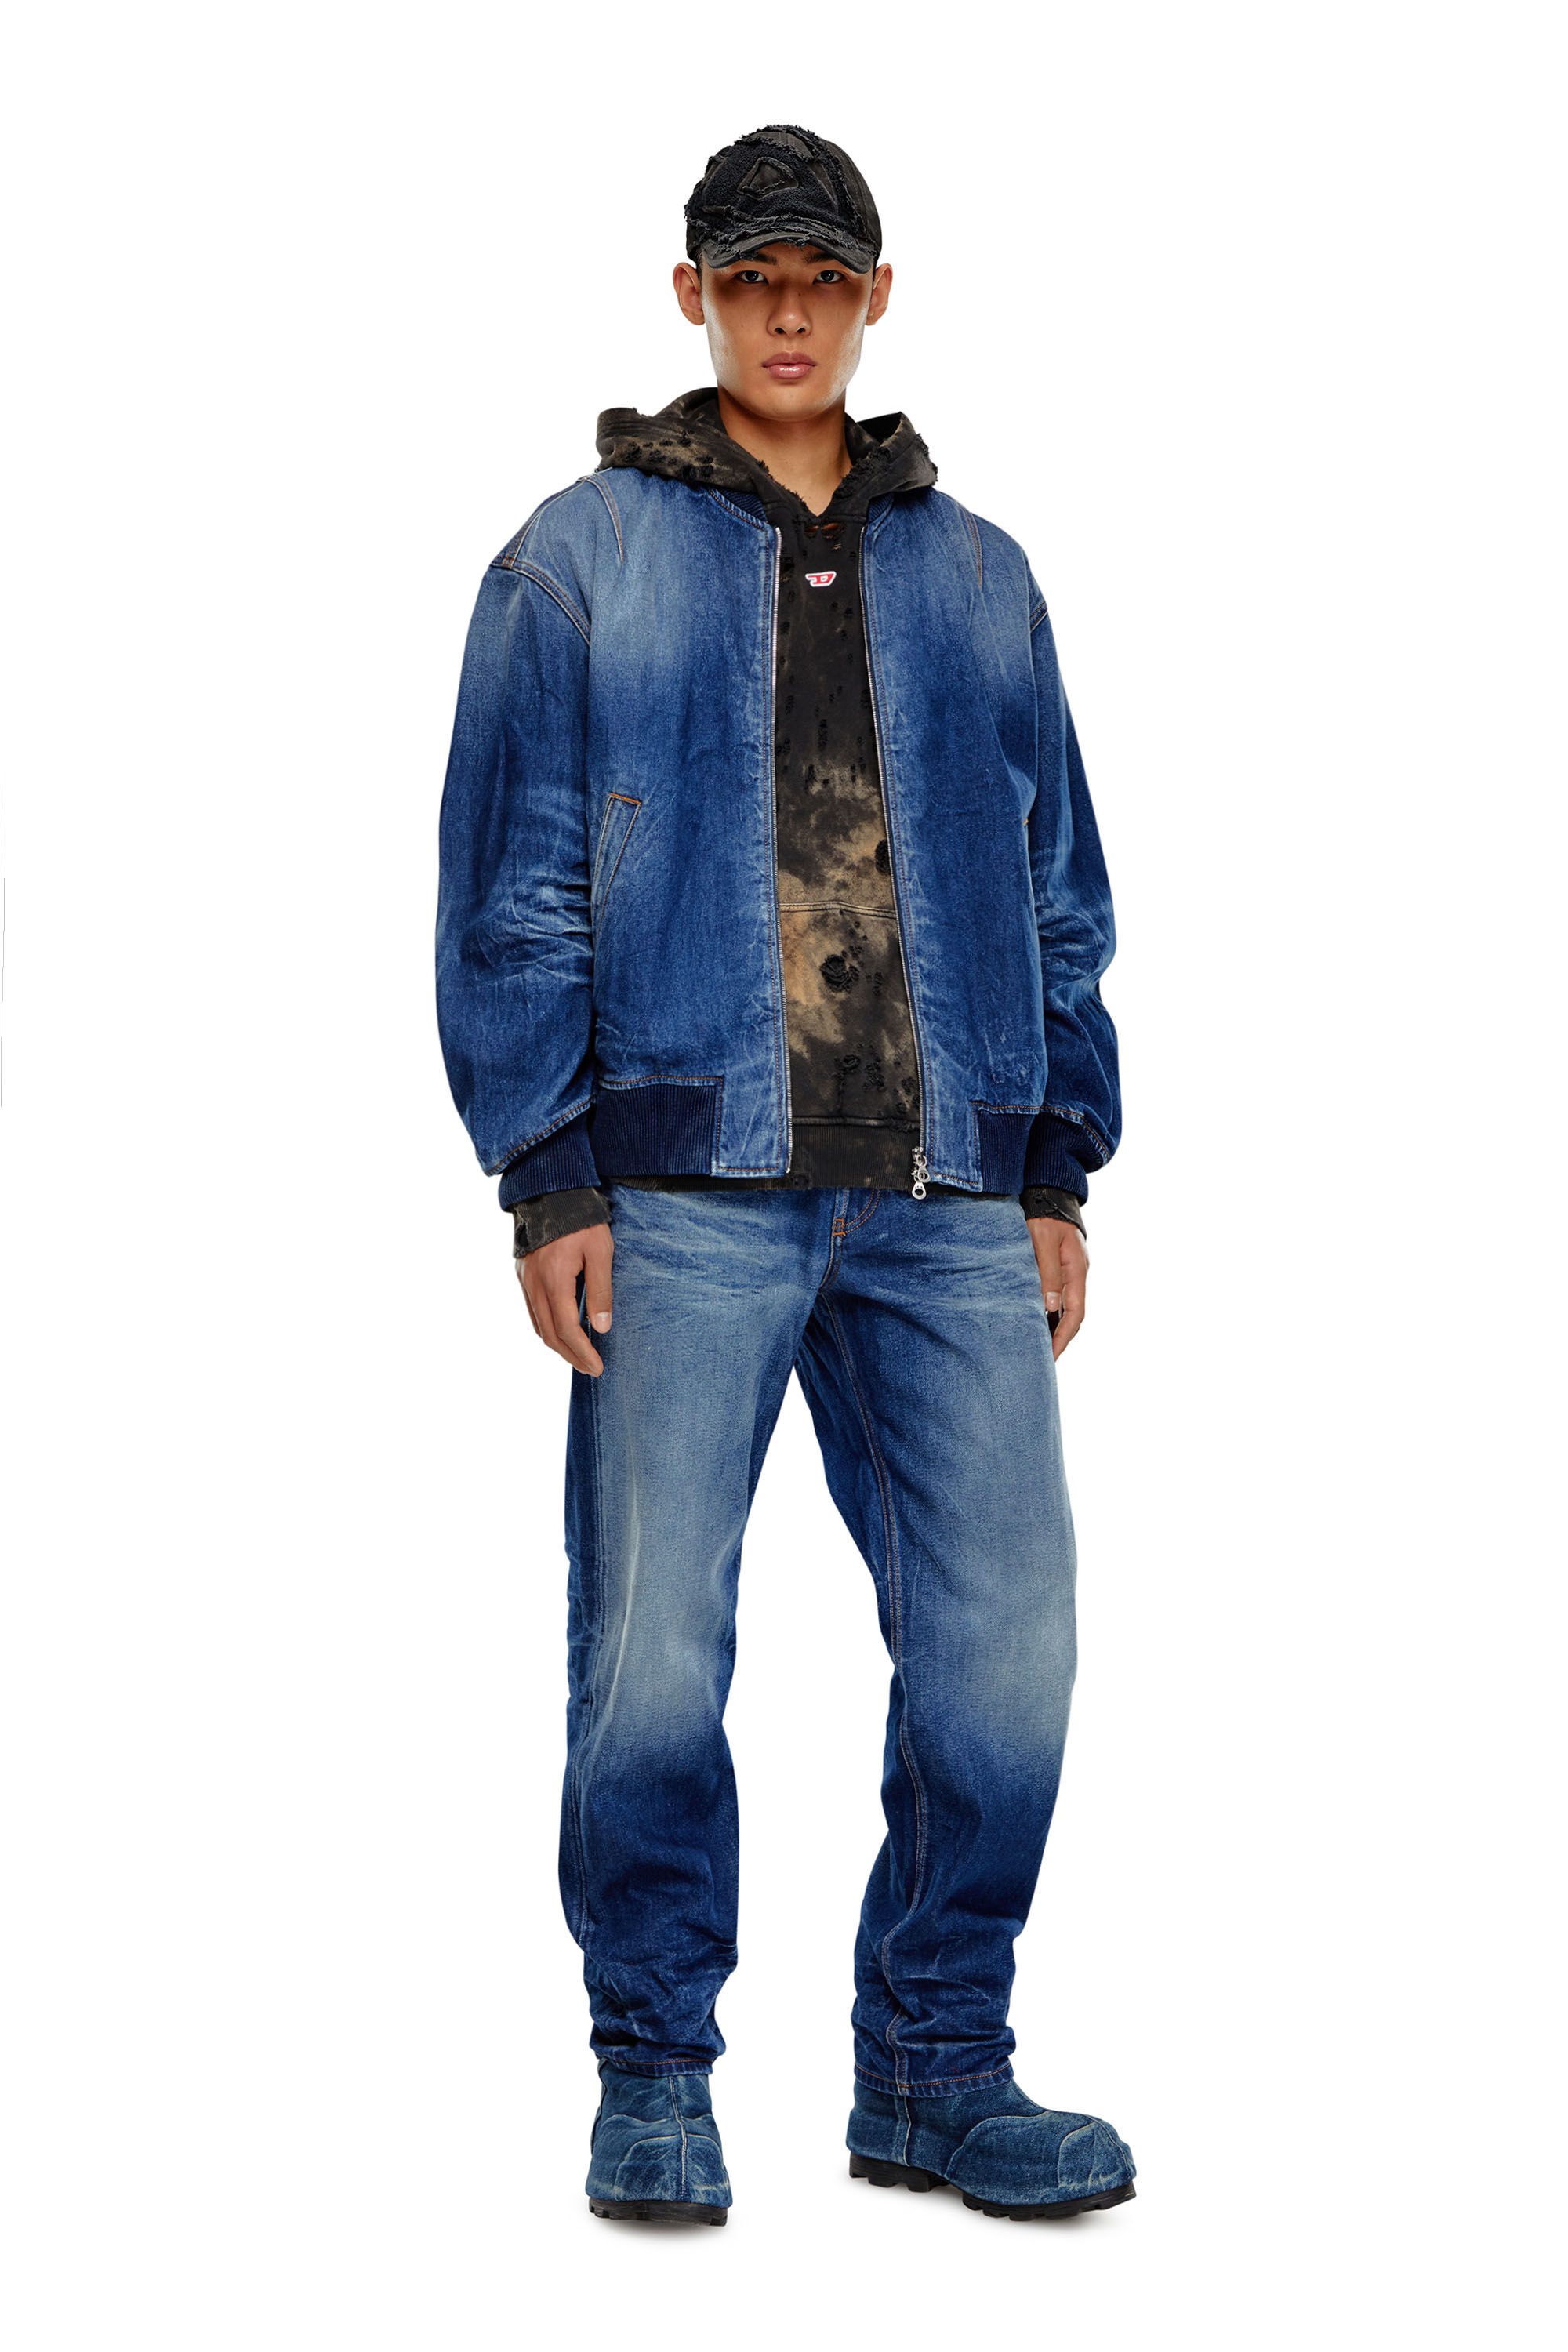 Diesel - D-VINZ-S, Man Bomber jacket in dented denim in Blue - Image 1